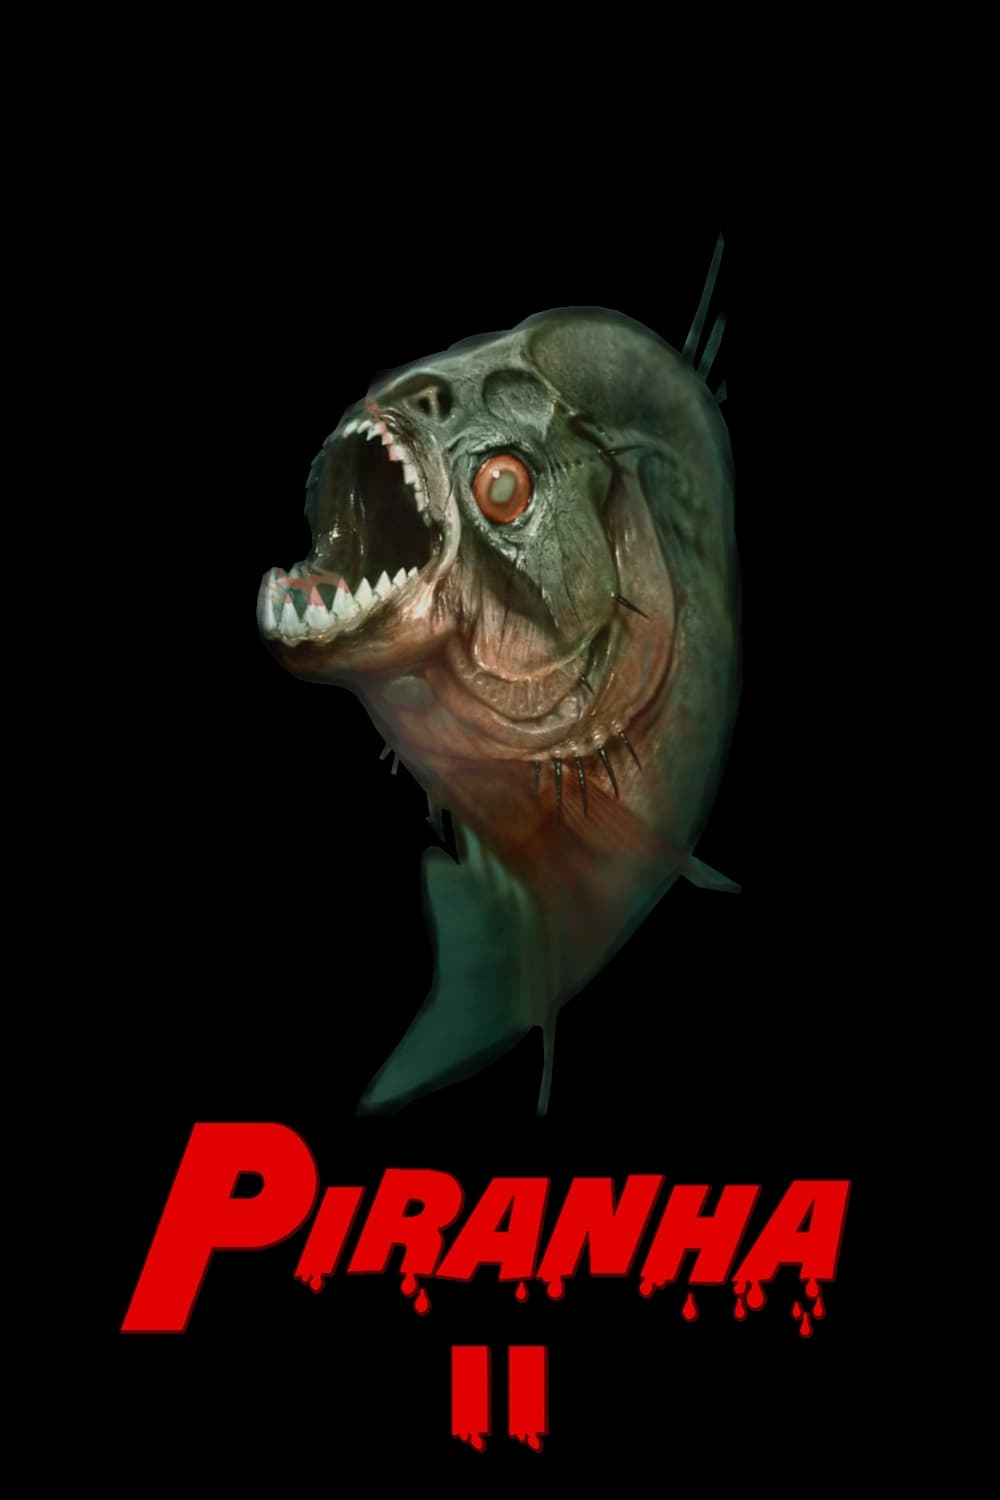 1982 Piranha II: The Spawning